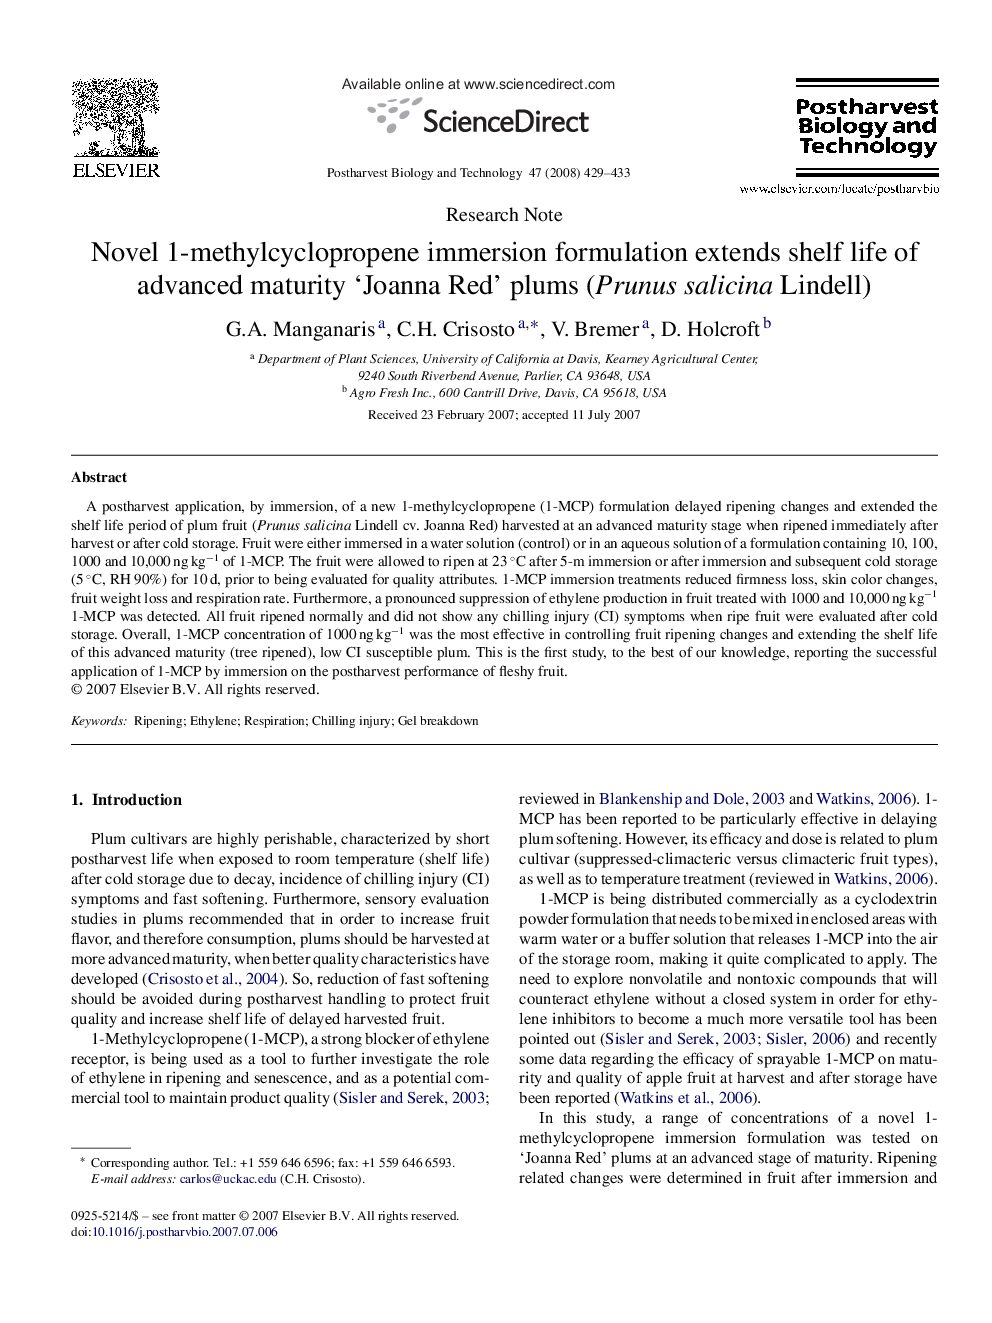 Novel 1-methylcyclopropene immersion formulation extends shelf life of advanced maturity 'Joanna Red' plums (Prunus salicina Lindell)